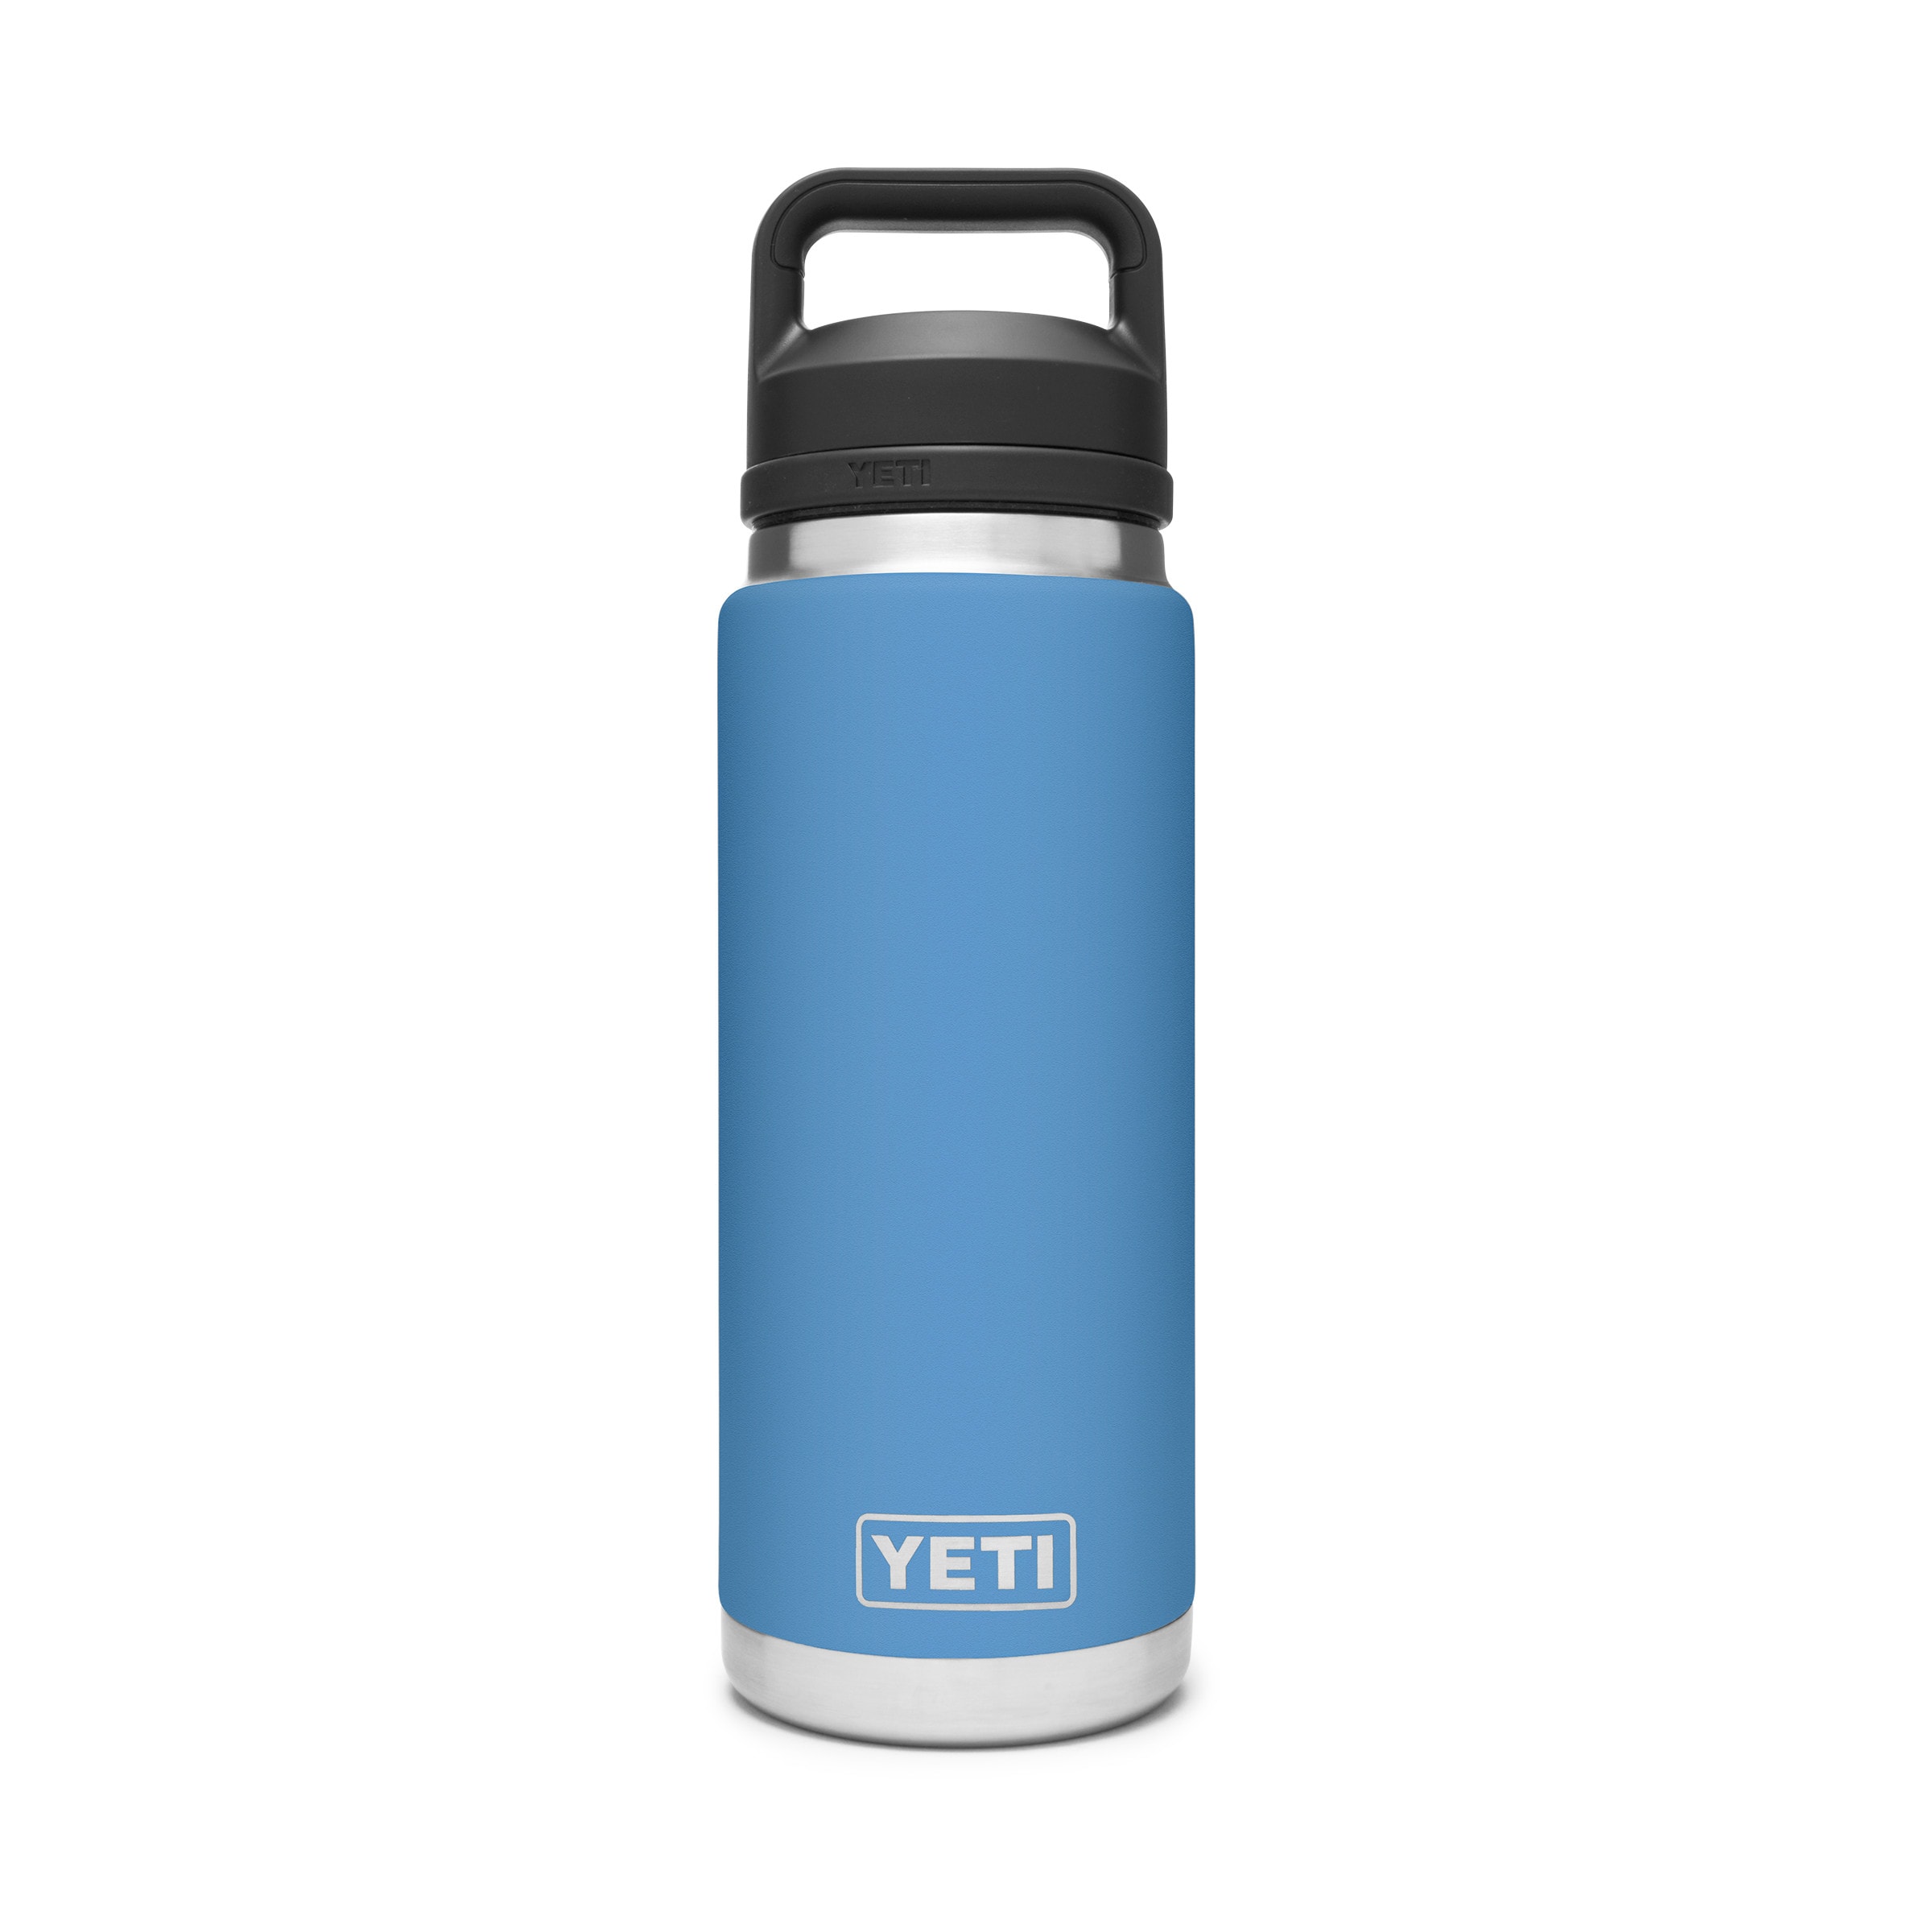  XACIOA Spout Lid for Yeti Rambler Water Bottle 18 26